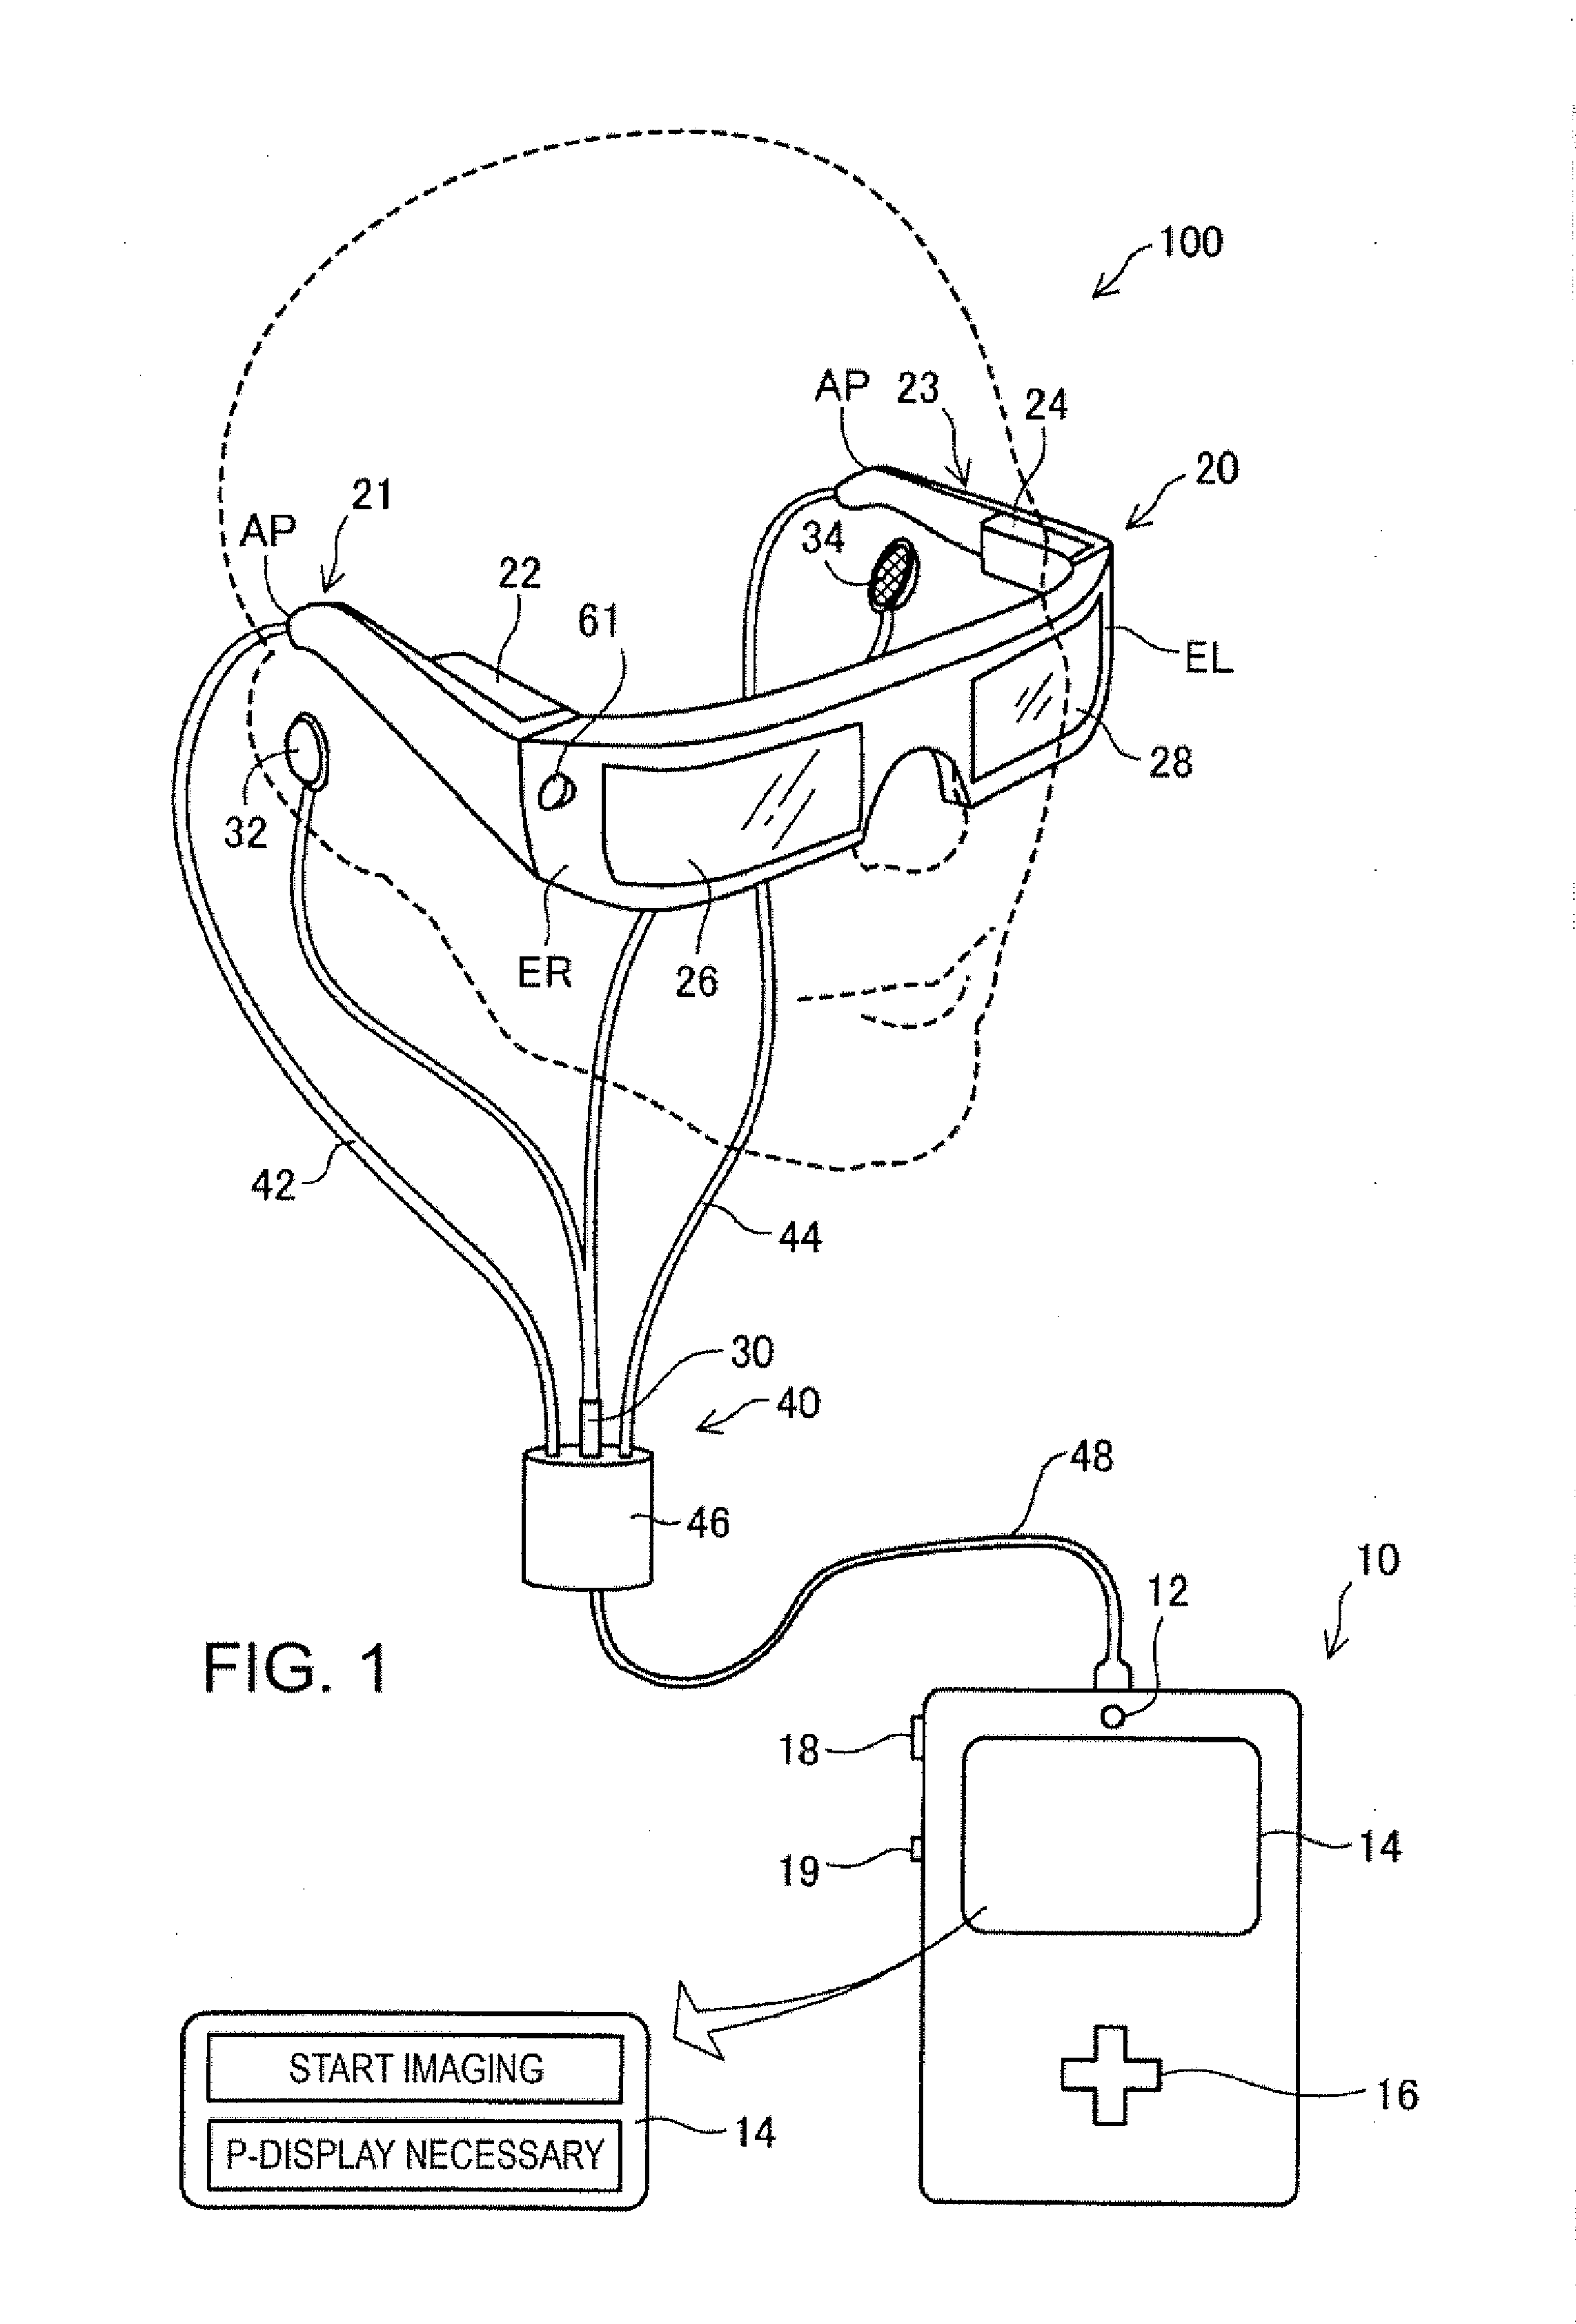 Head mounted display device